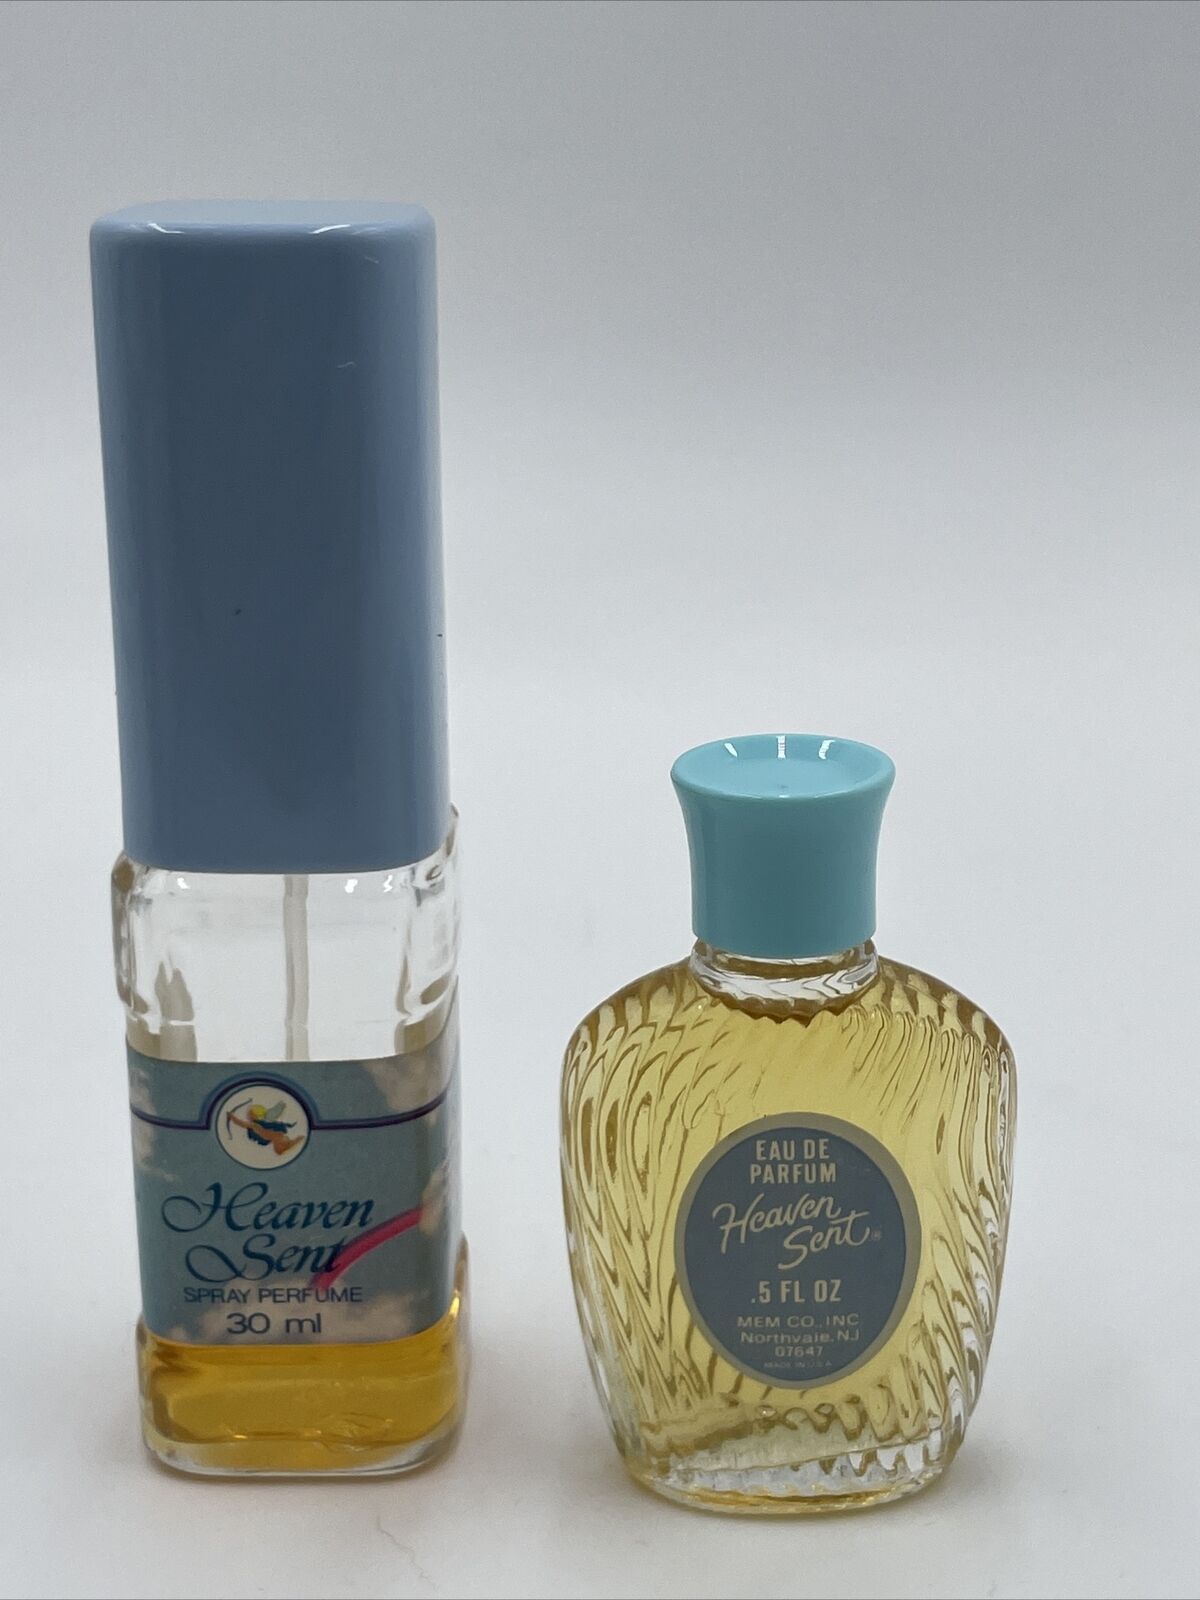 2 Bottles of Helena Rubinstein Fragrance Heaven Sent Perfume Vintage Rare Old